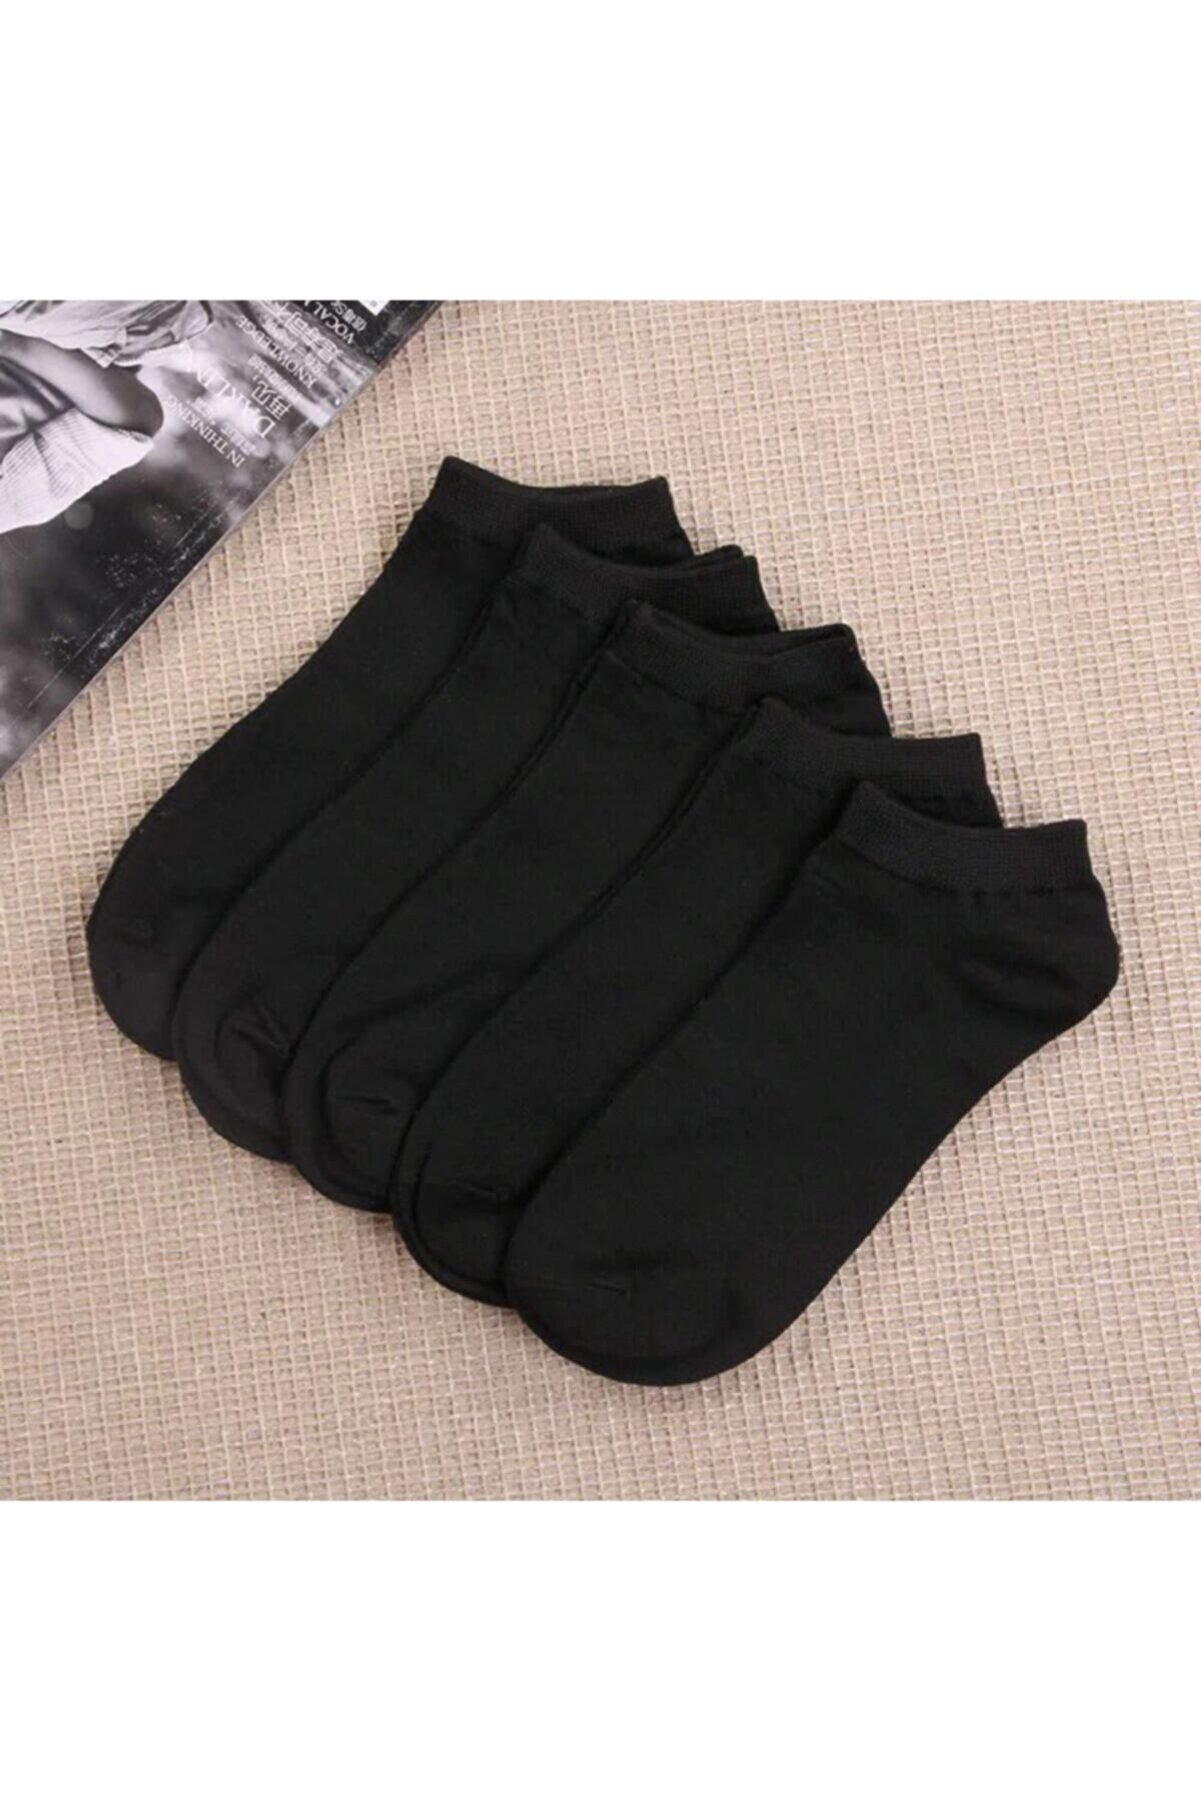 BGK Unisex Yazlık Patik Çorap 5 'li Extra Rahat Siyah